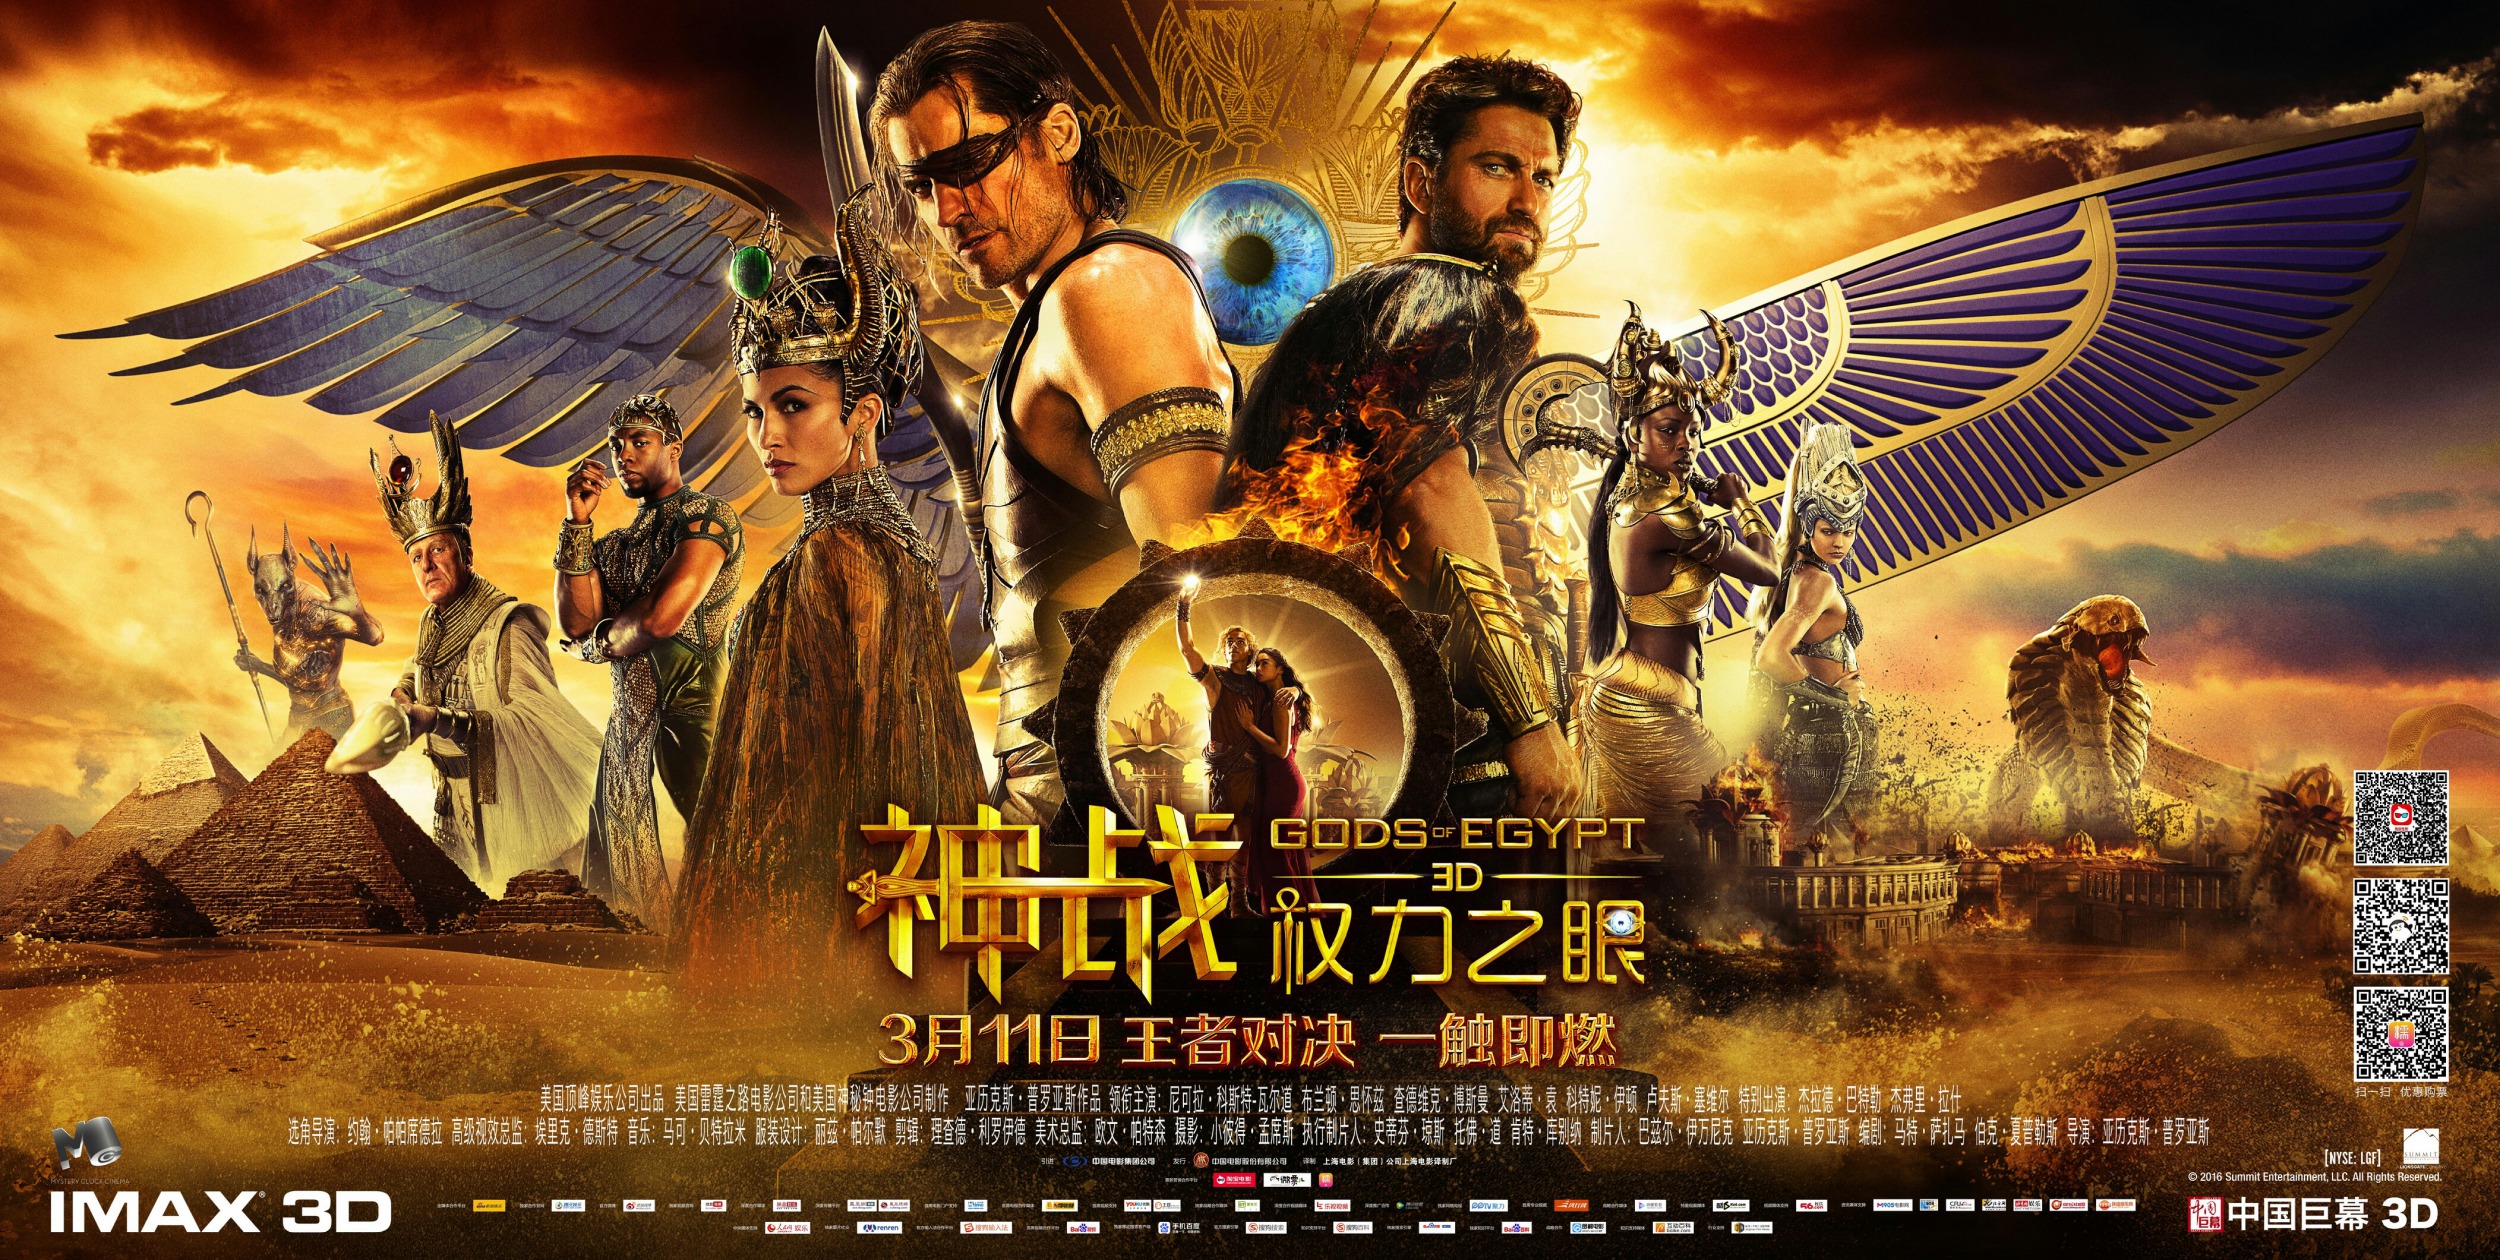 Mega Sized Movie Poster Image for Gods of Egypt (#22 of 27)